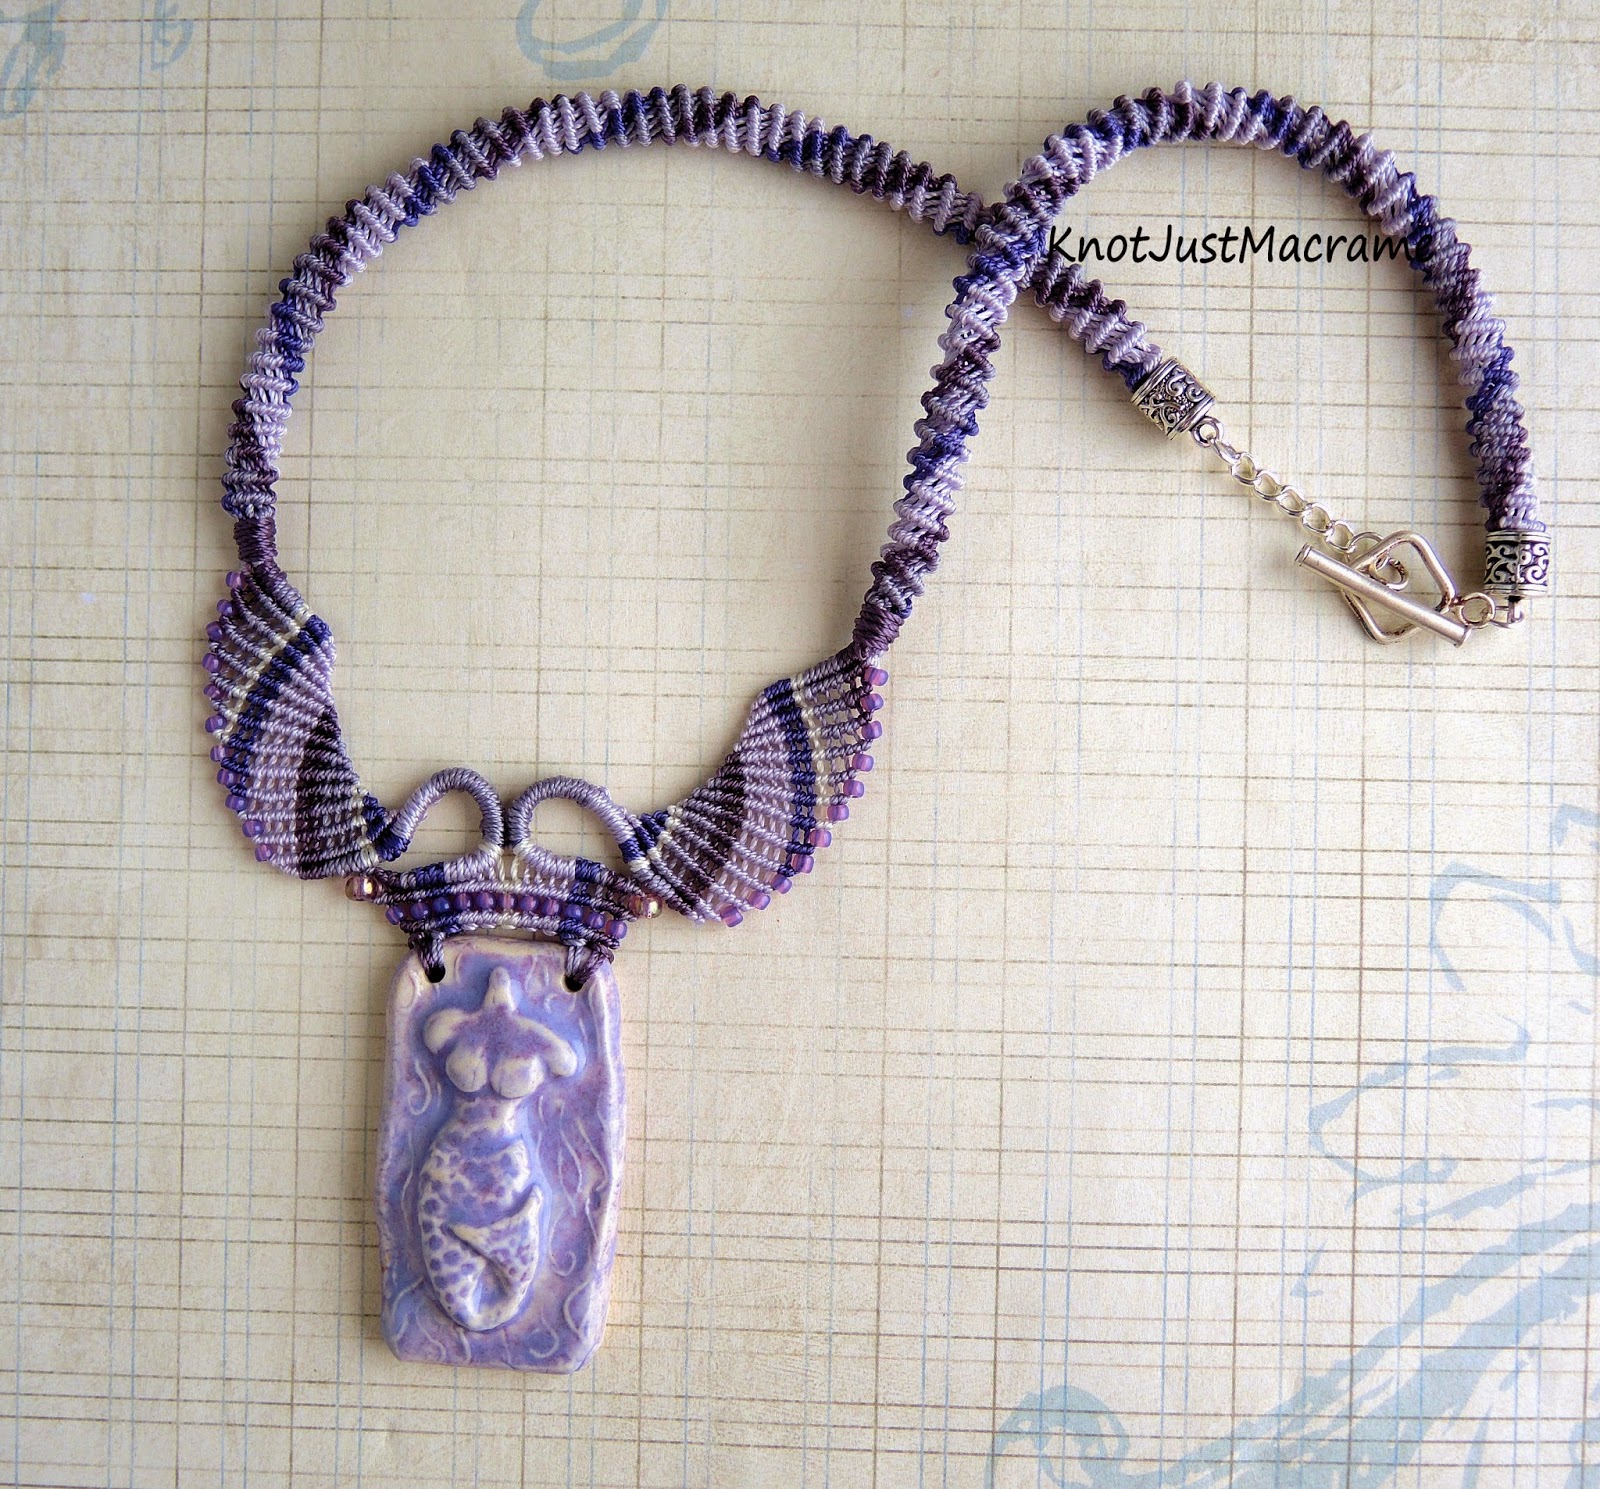 Micro macrame necklace by Sherri Stokey with mermaid ceramic pendant by Gaea.